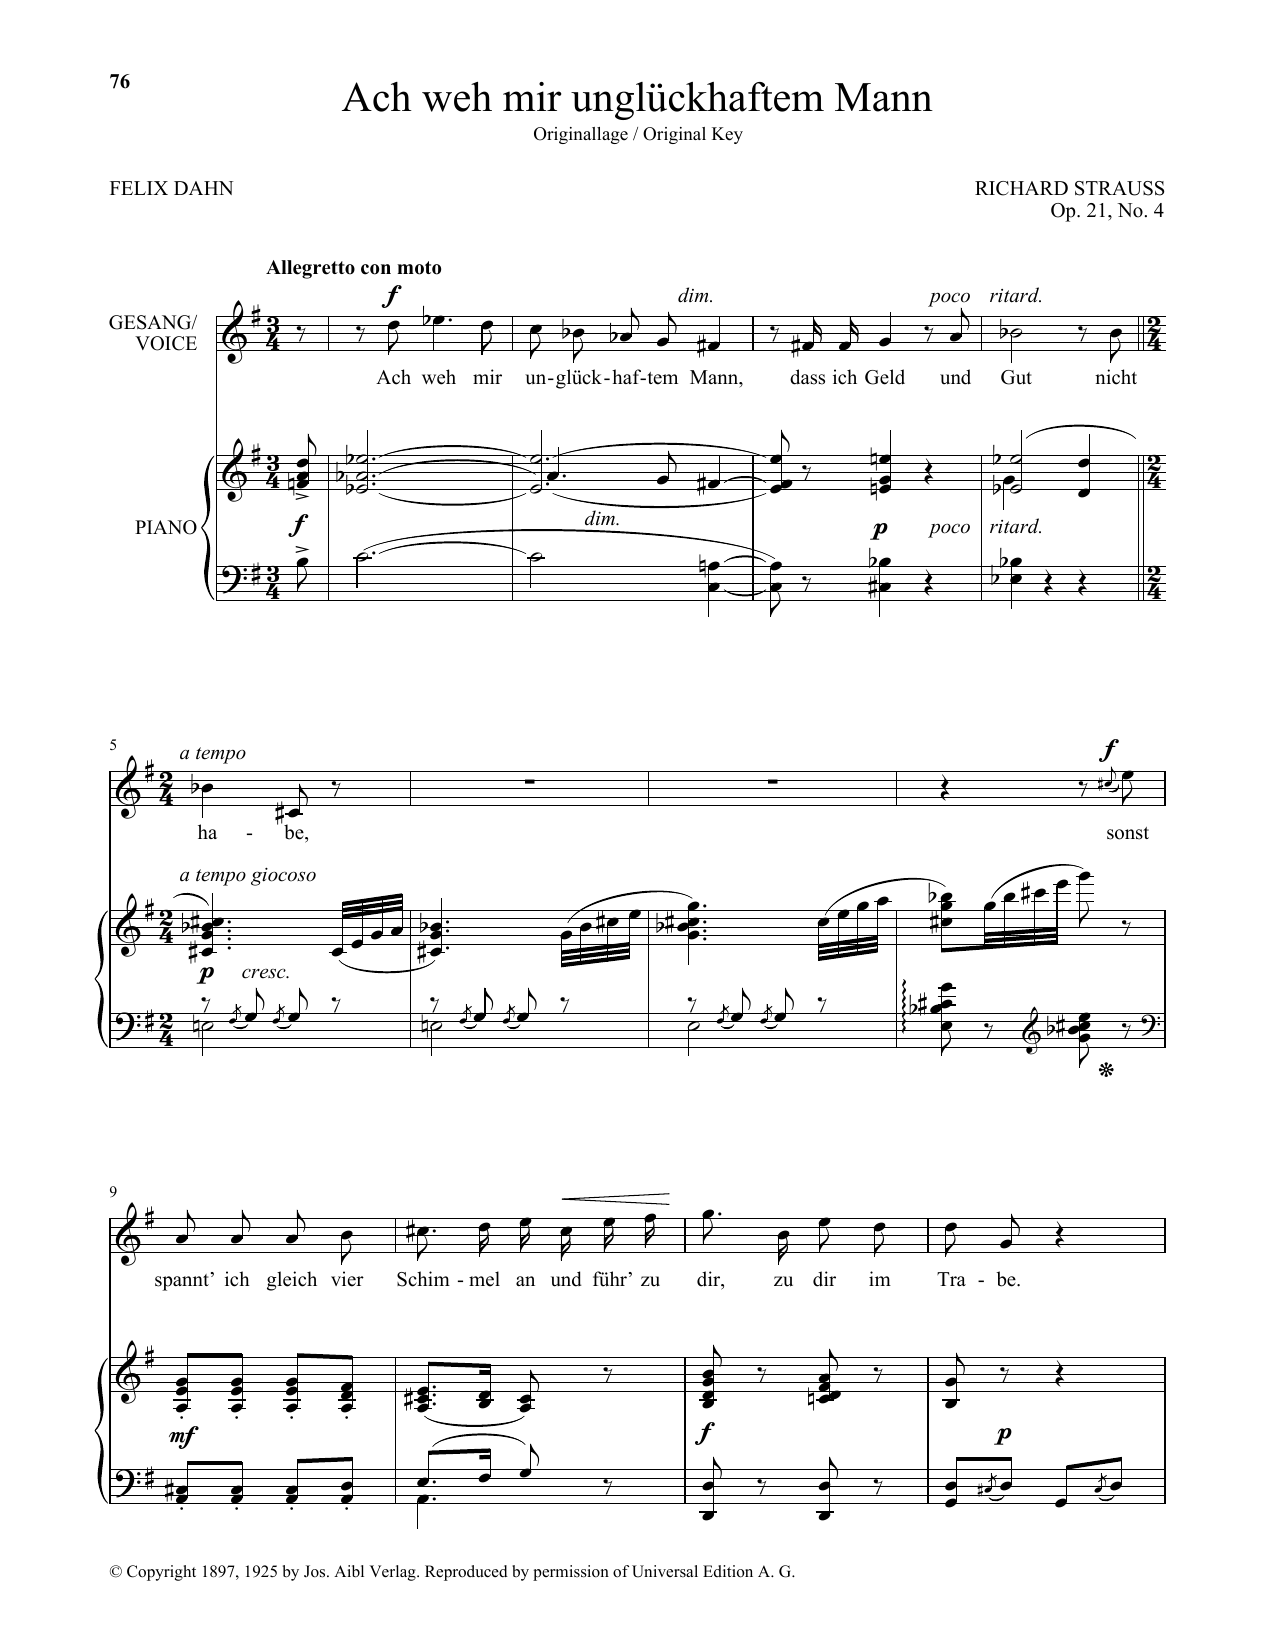 Richard Strauss Ach Weh Mir Ungluckhaftem Mann (High Voice) Sheet Music Notes & Chords for Piano & Vocal - Download or Print PDF